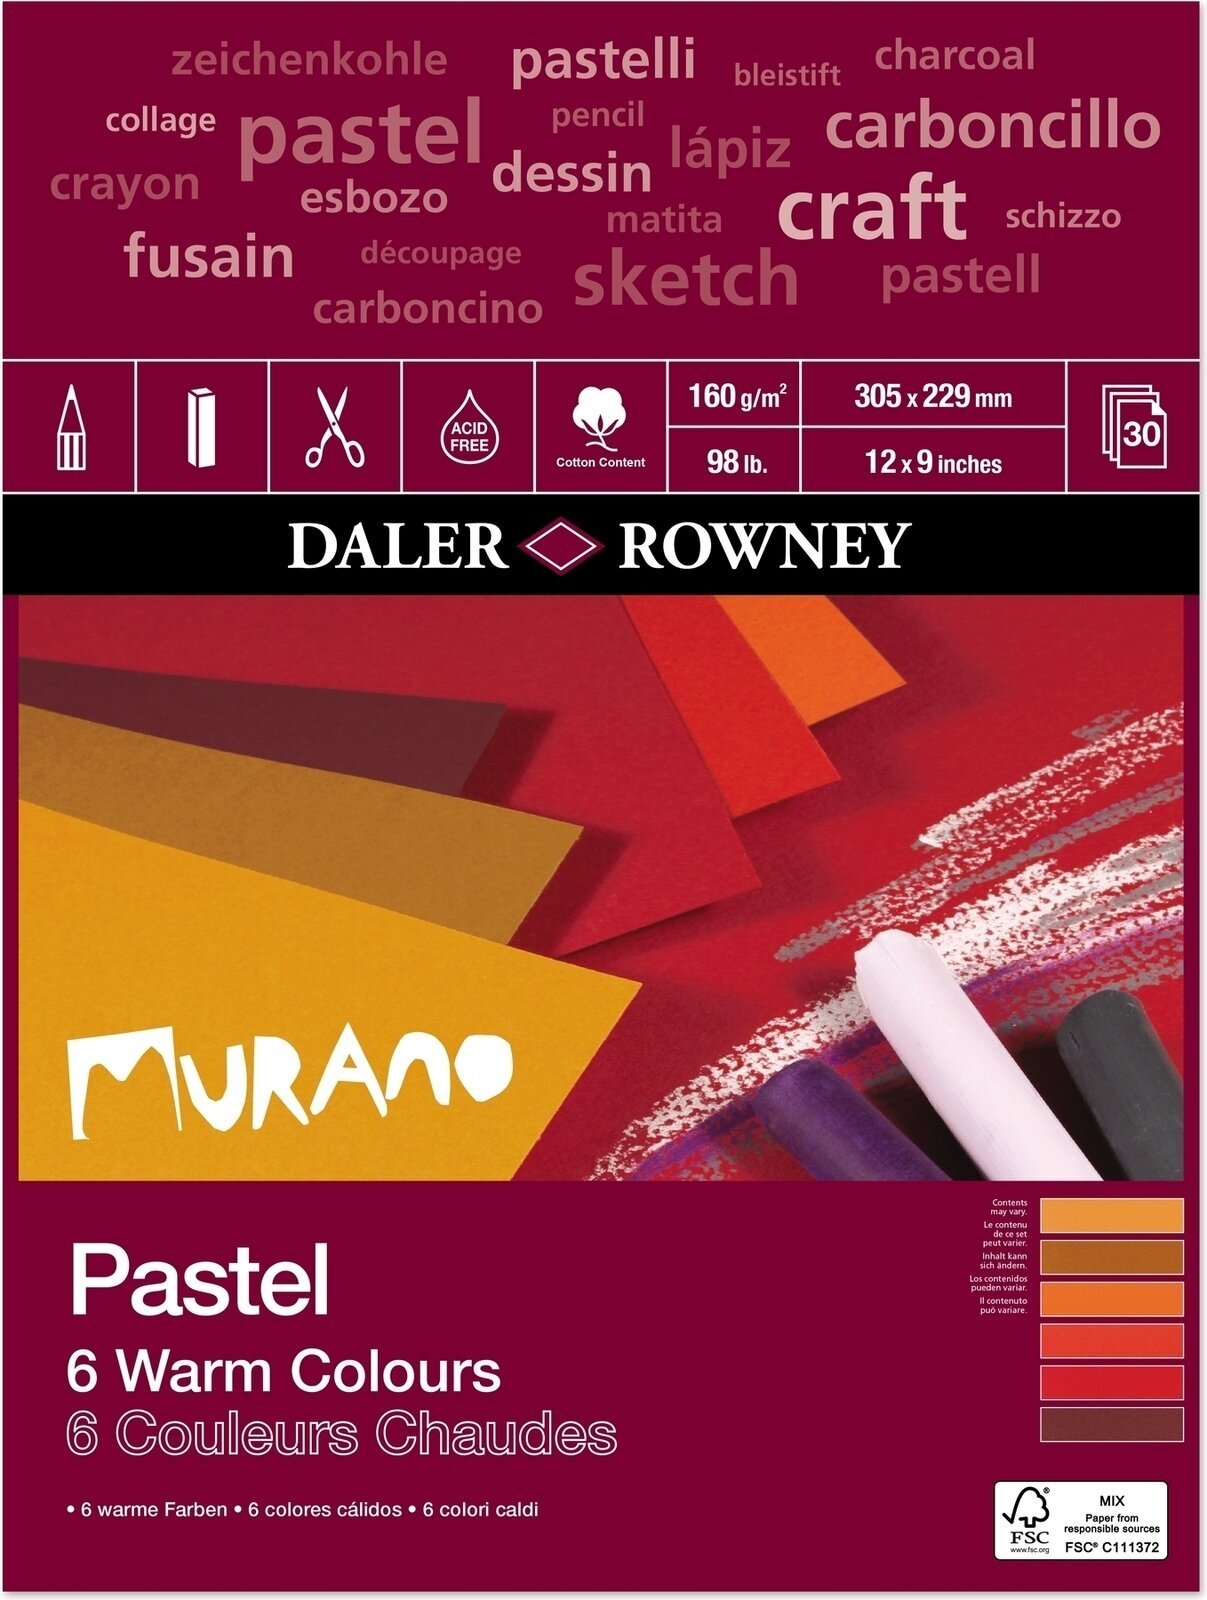 Vázlattömb Daler Rowney Murano Pastel Paper 30,5 x 22,9 cm 160 g Warm Colours Vázlattömb